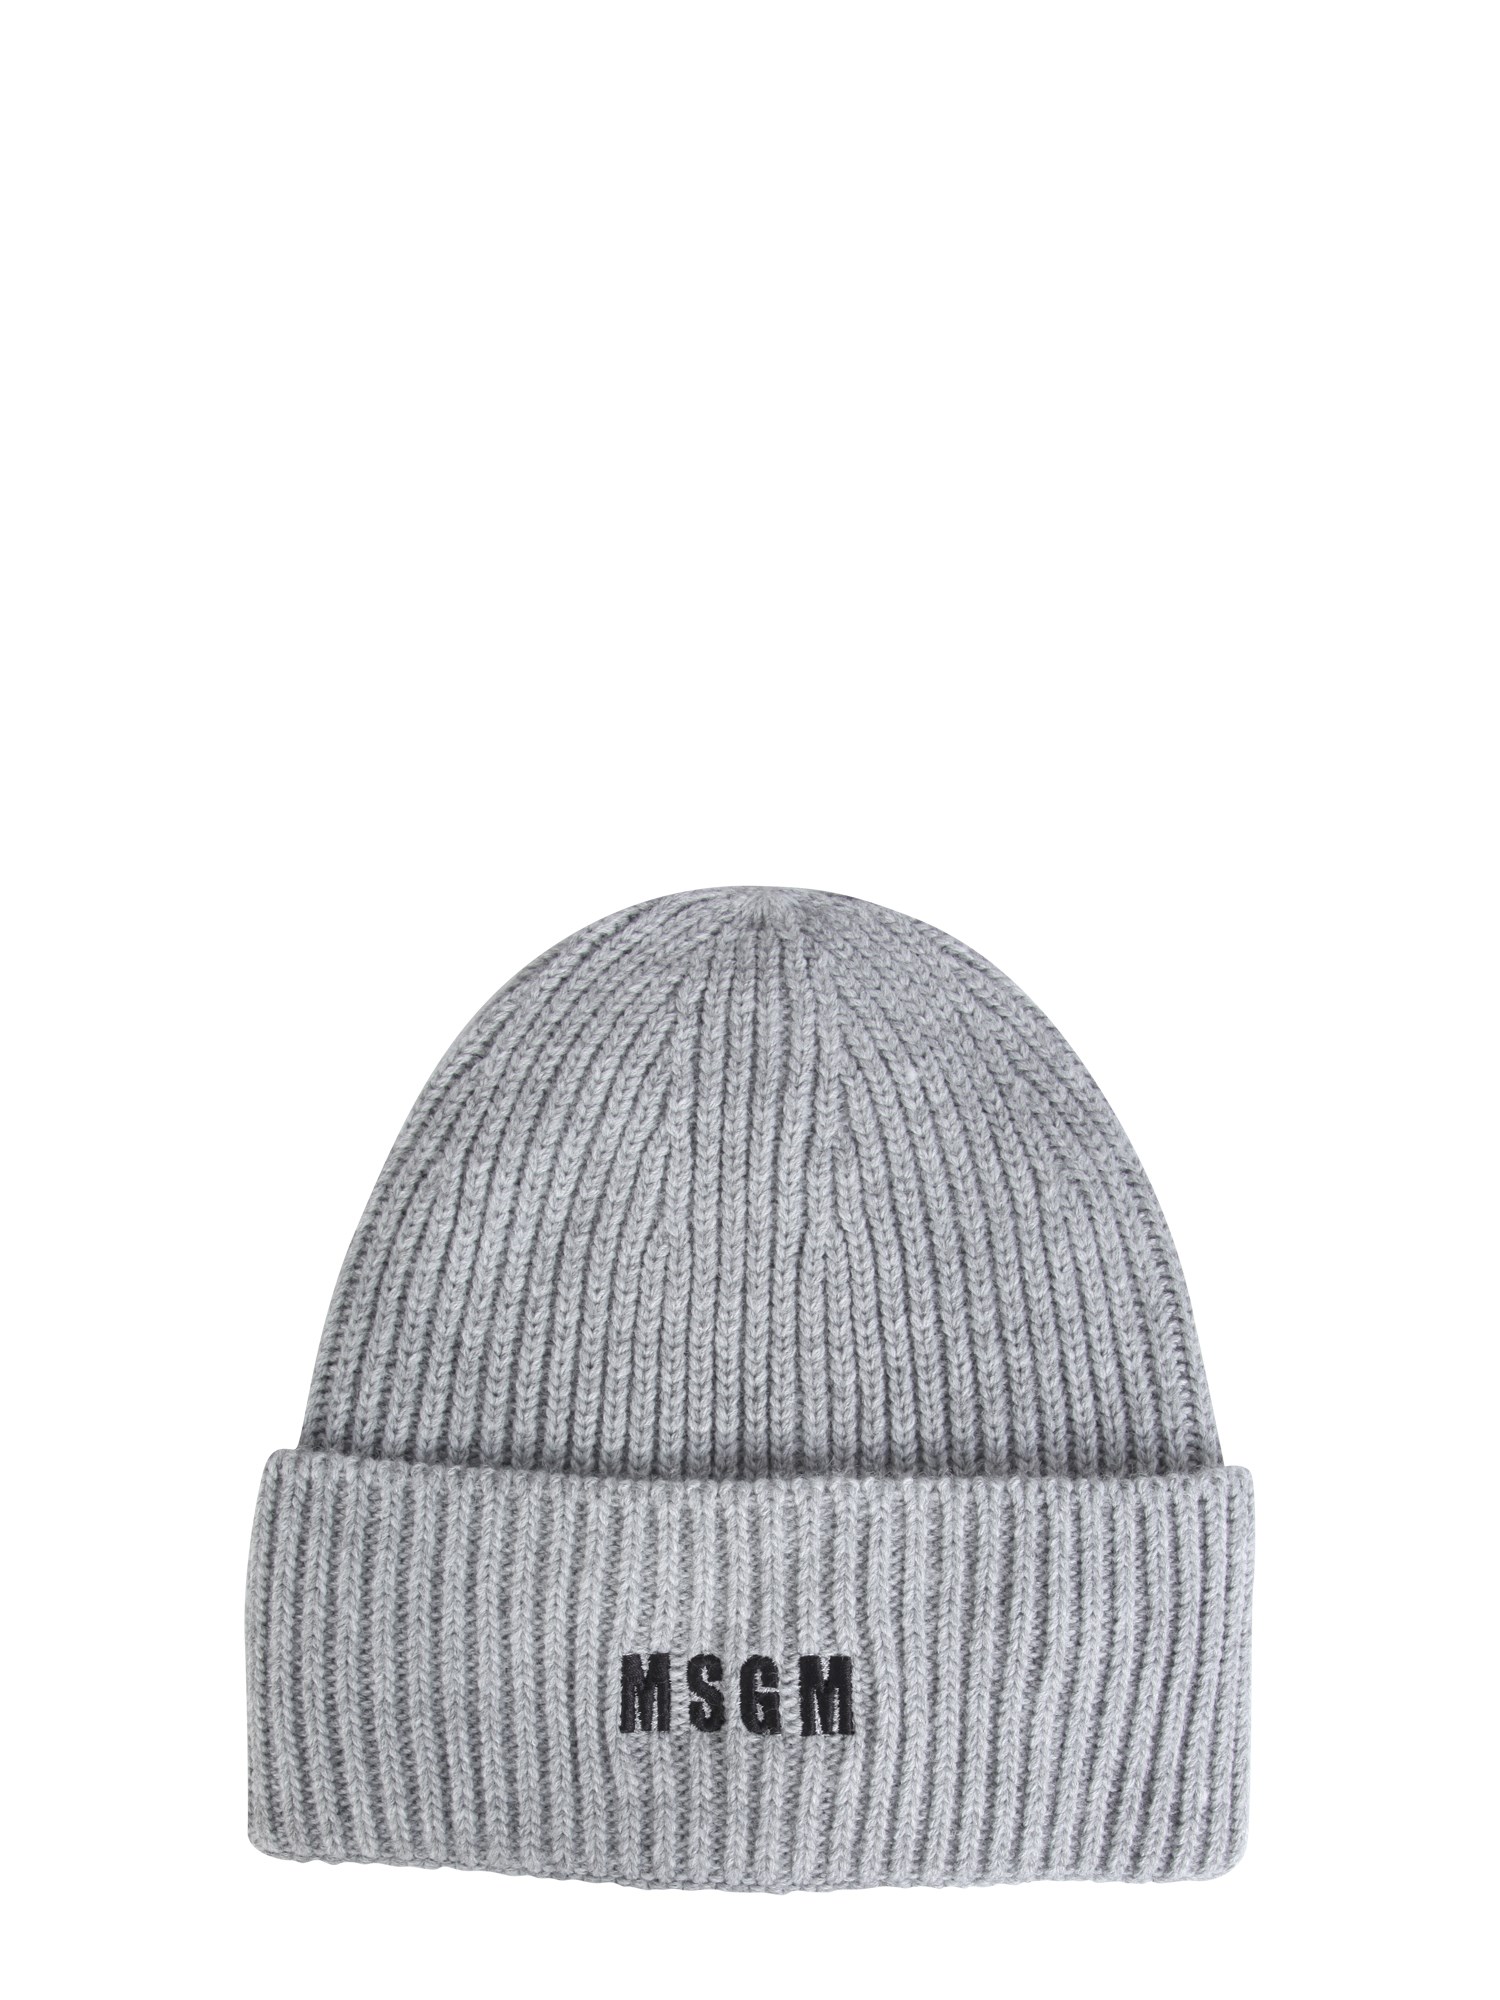 msgm acrylic hat